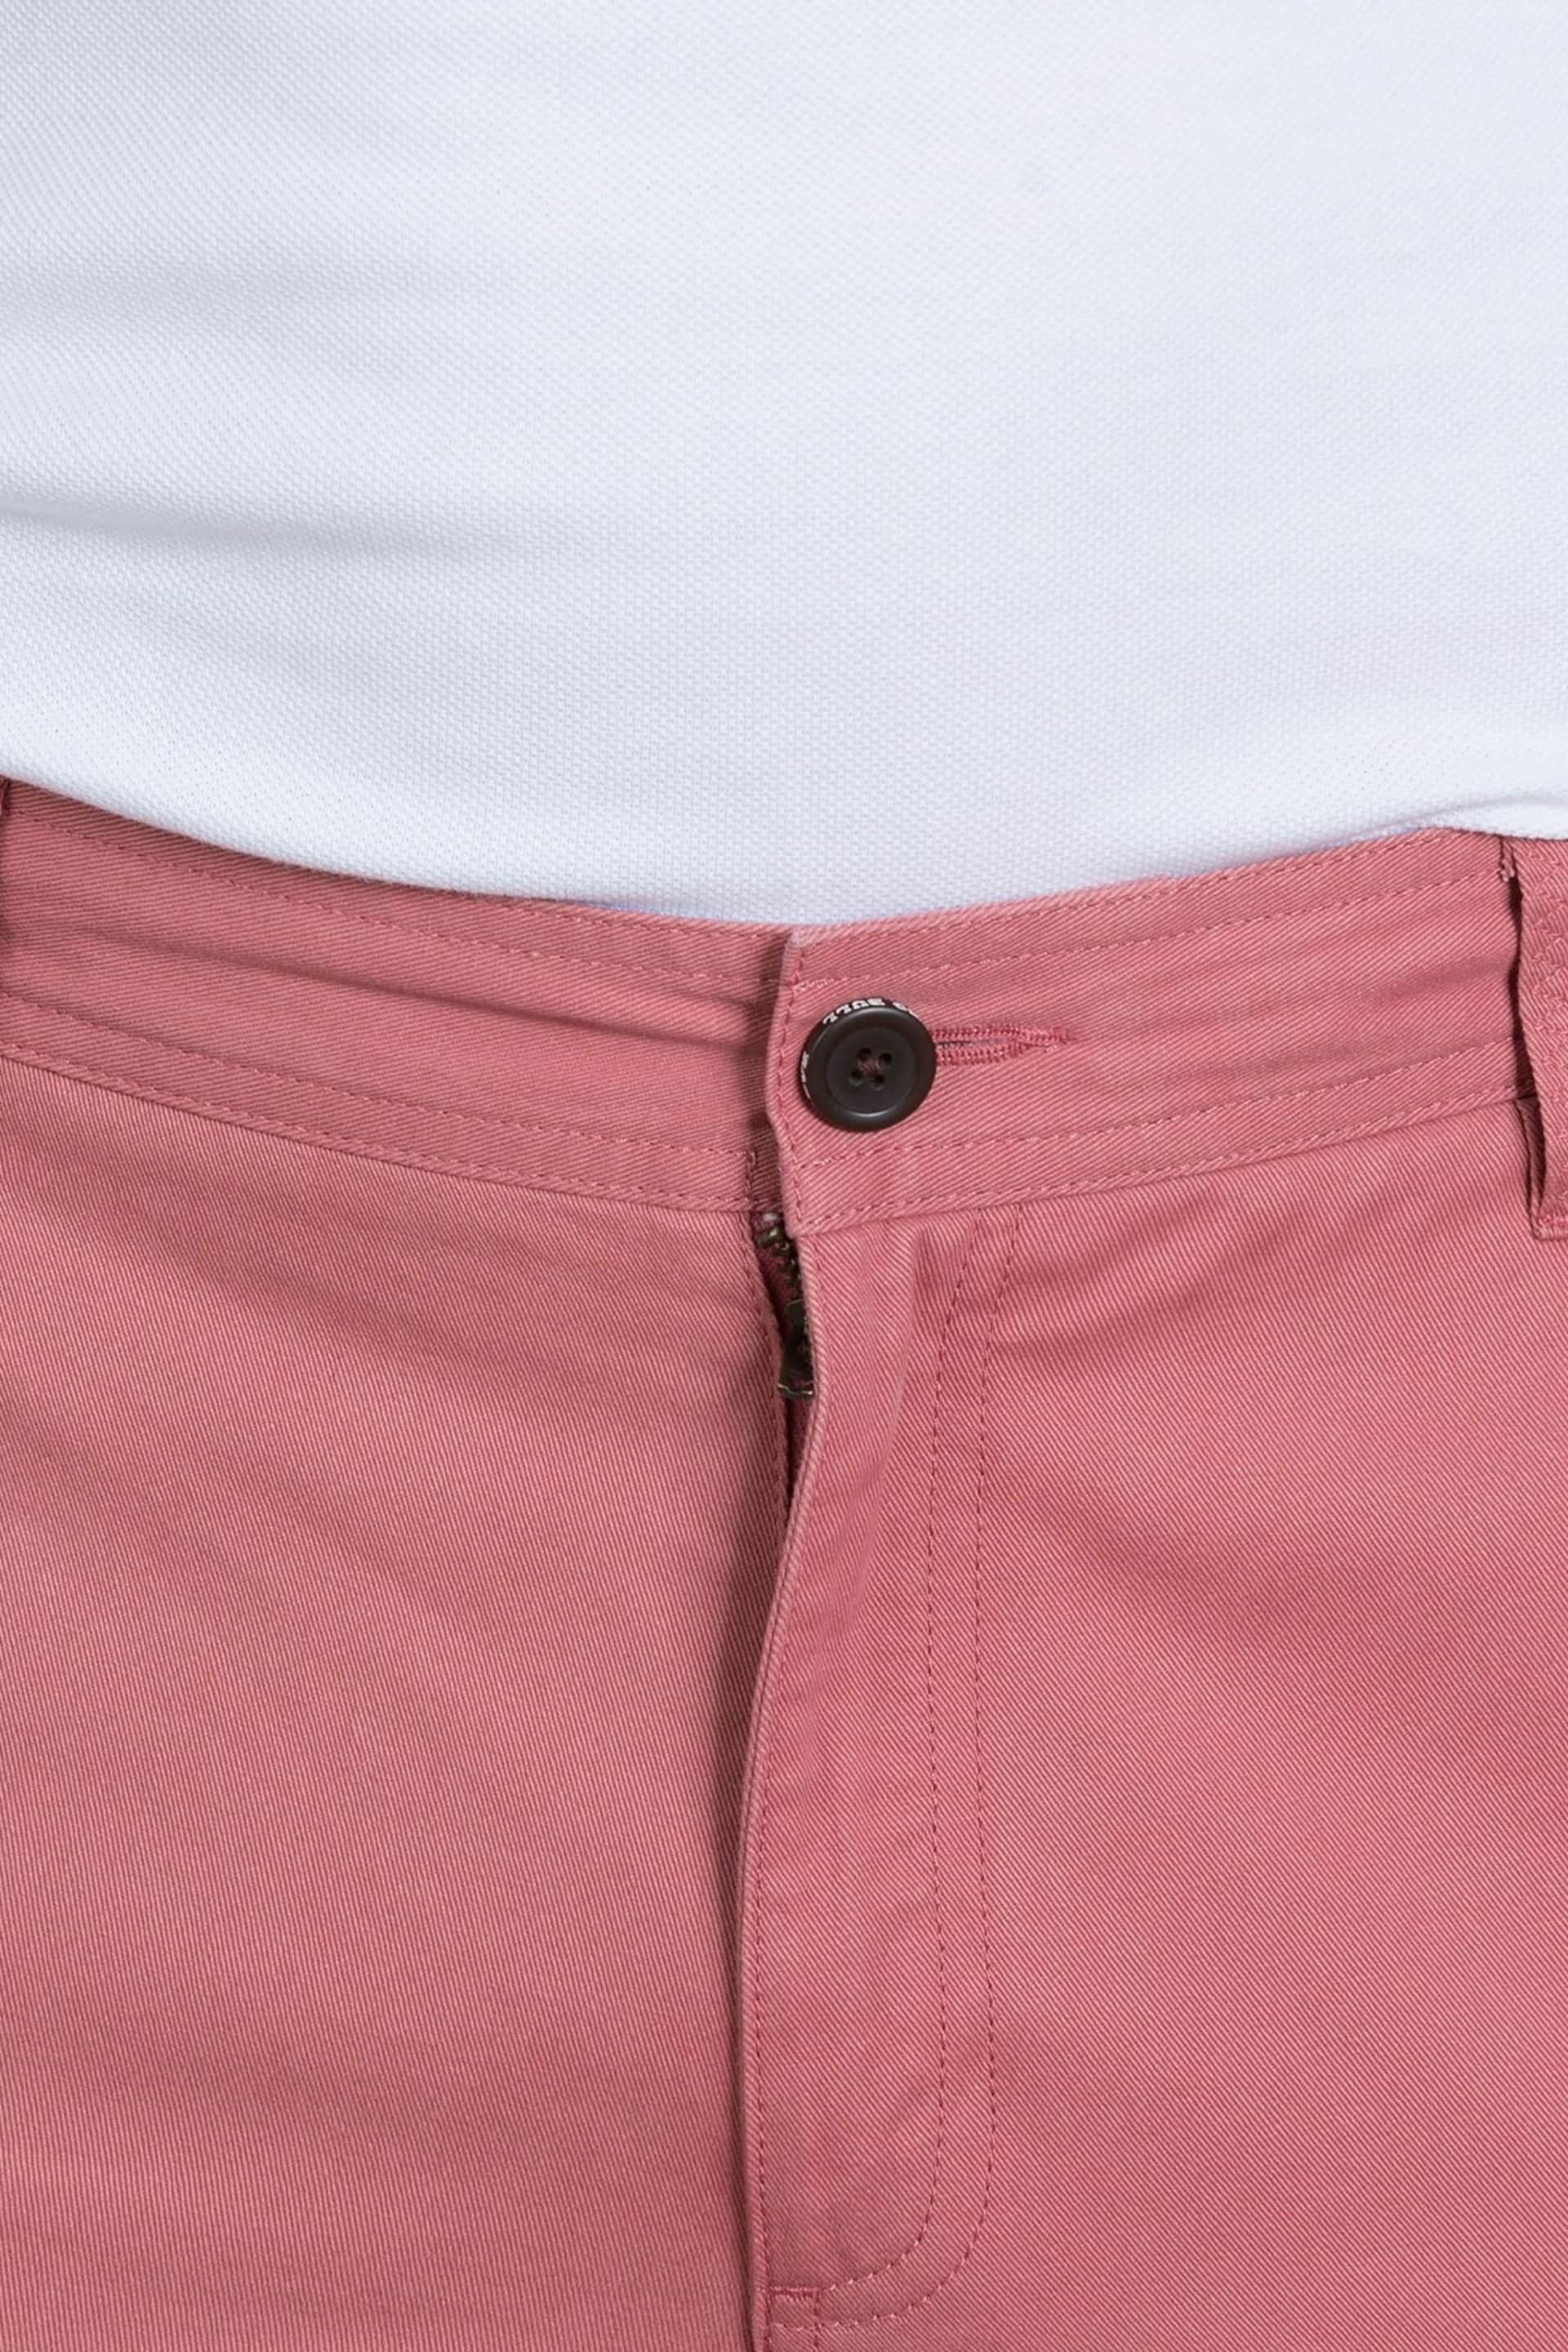 Raging Bull Pink Chino Shorts - Image 2 of 5